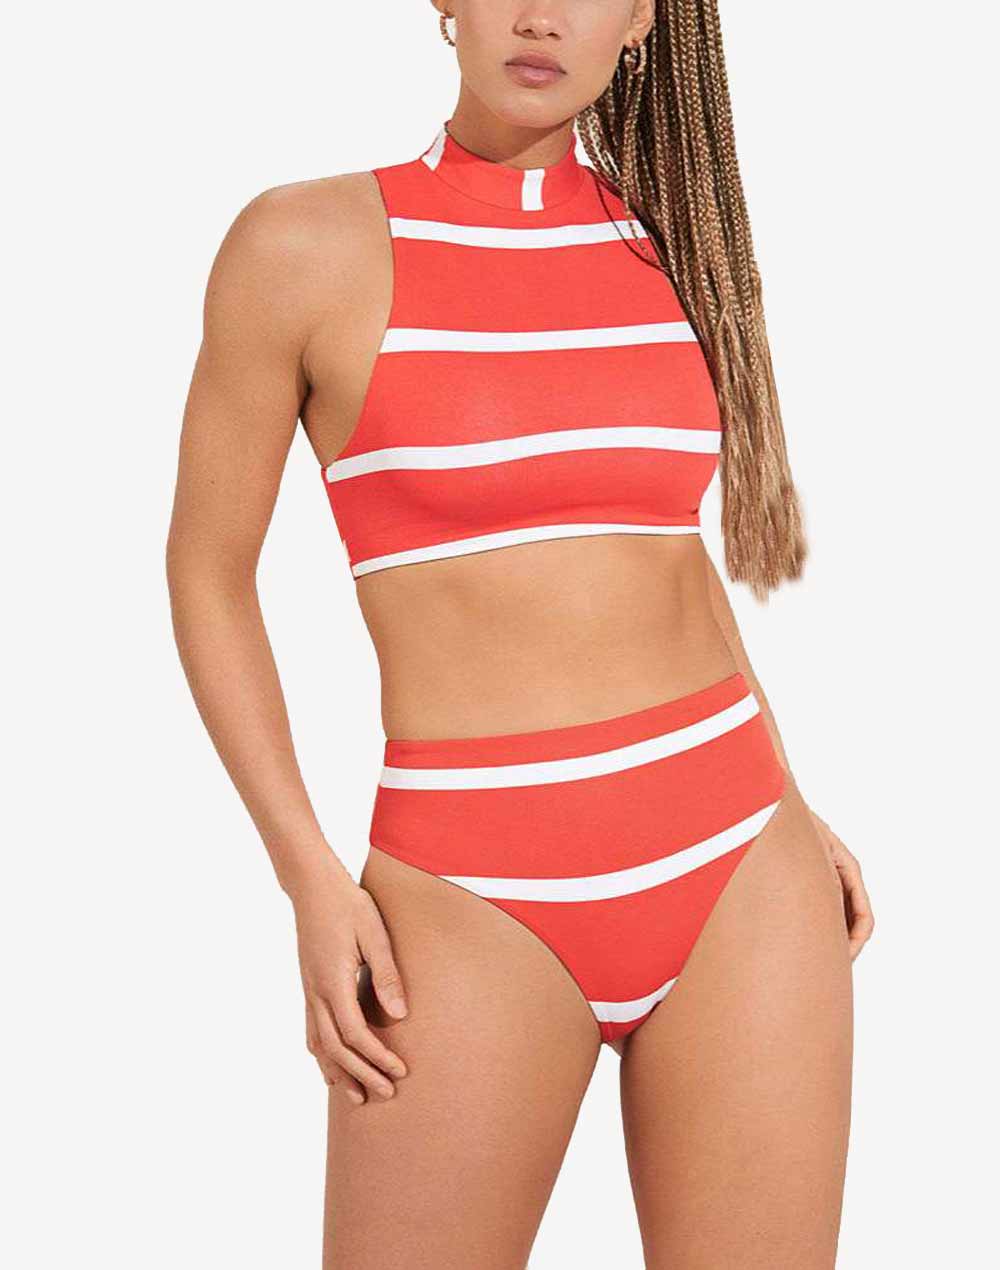 Sail Stripe Epica High Leg Bikini Bottom#color_sail-stripe-red